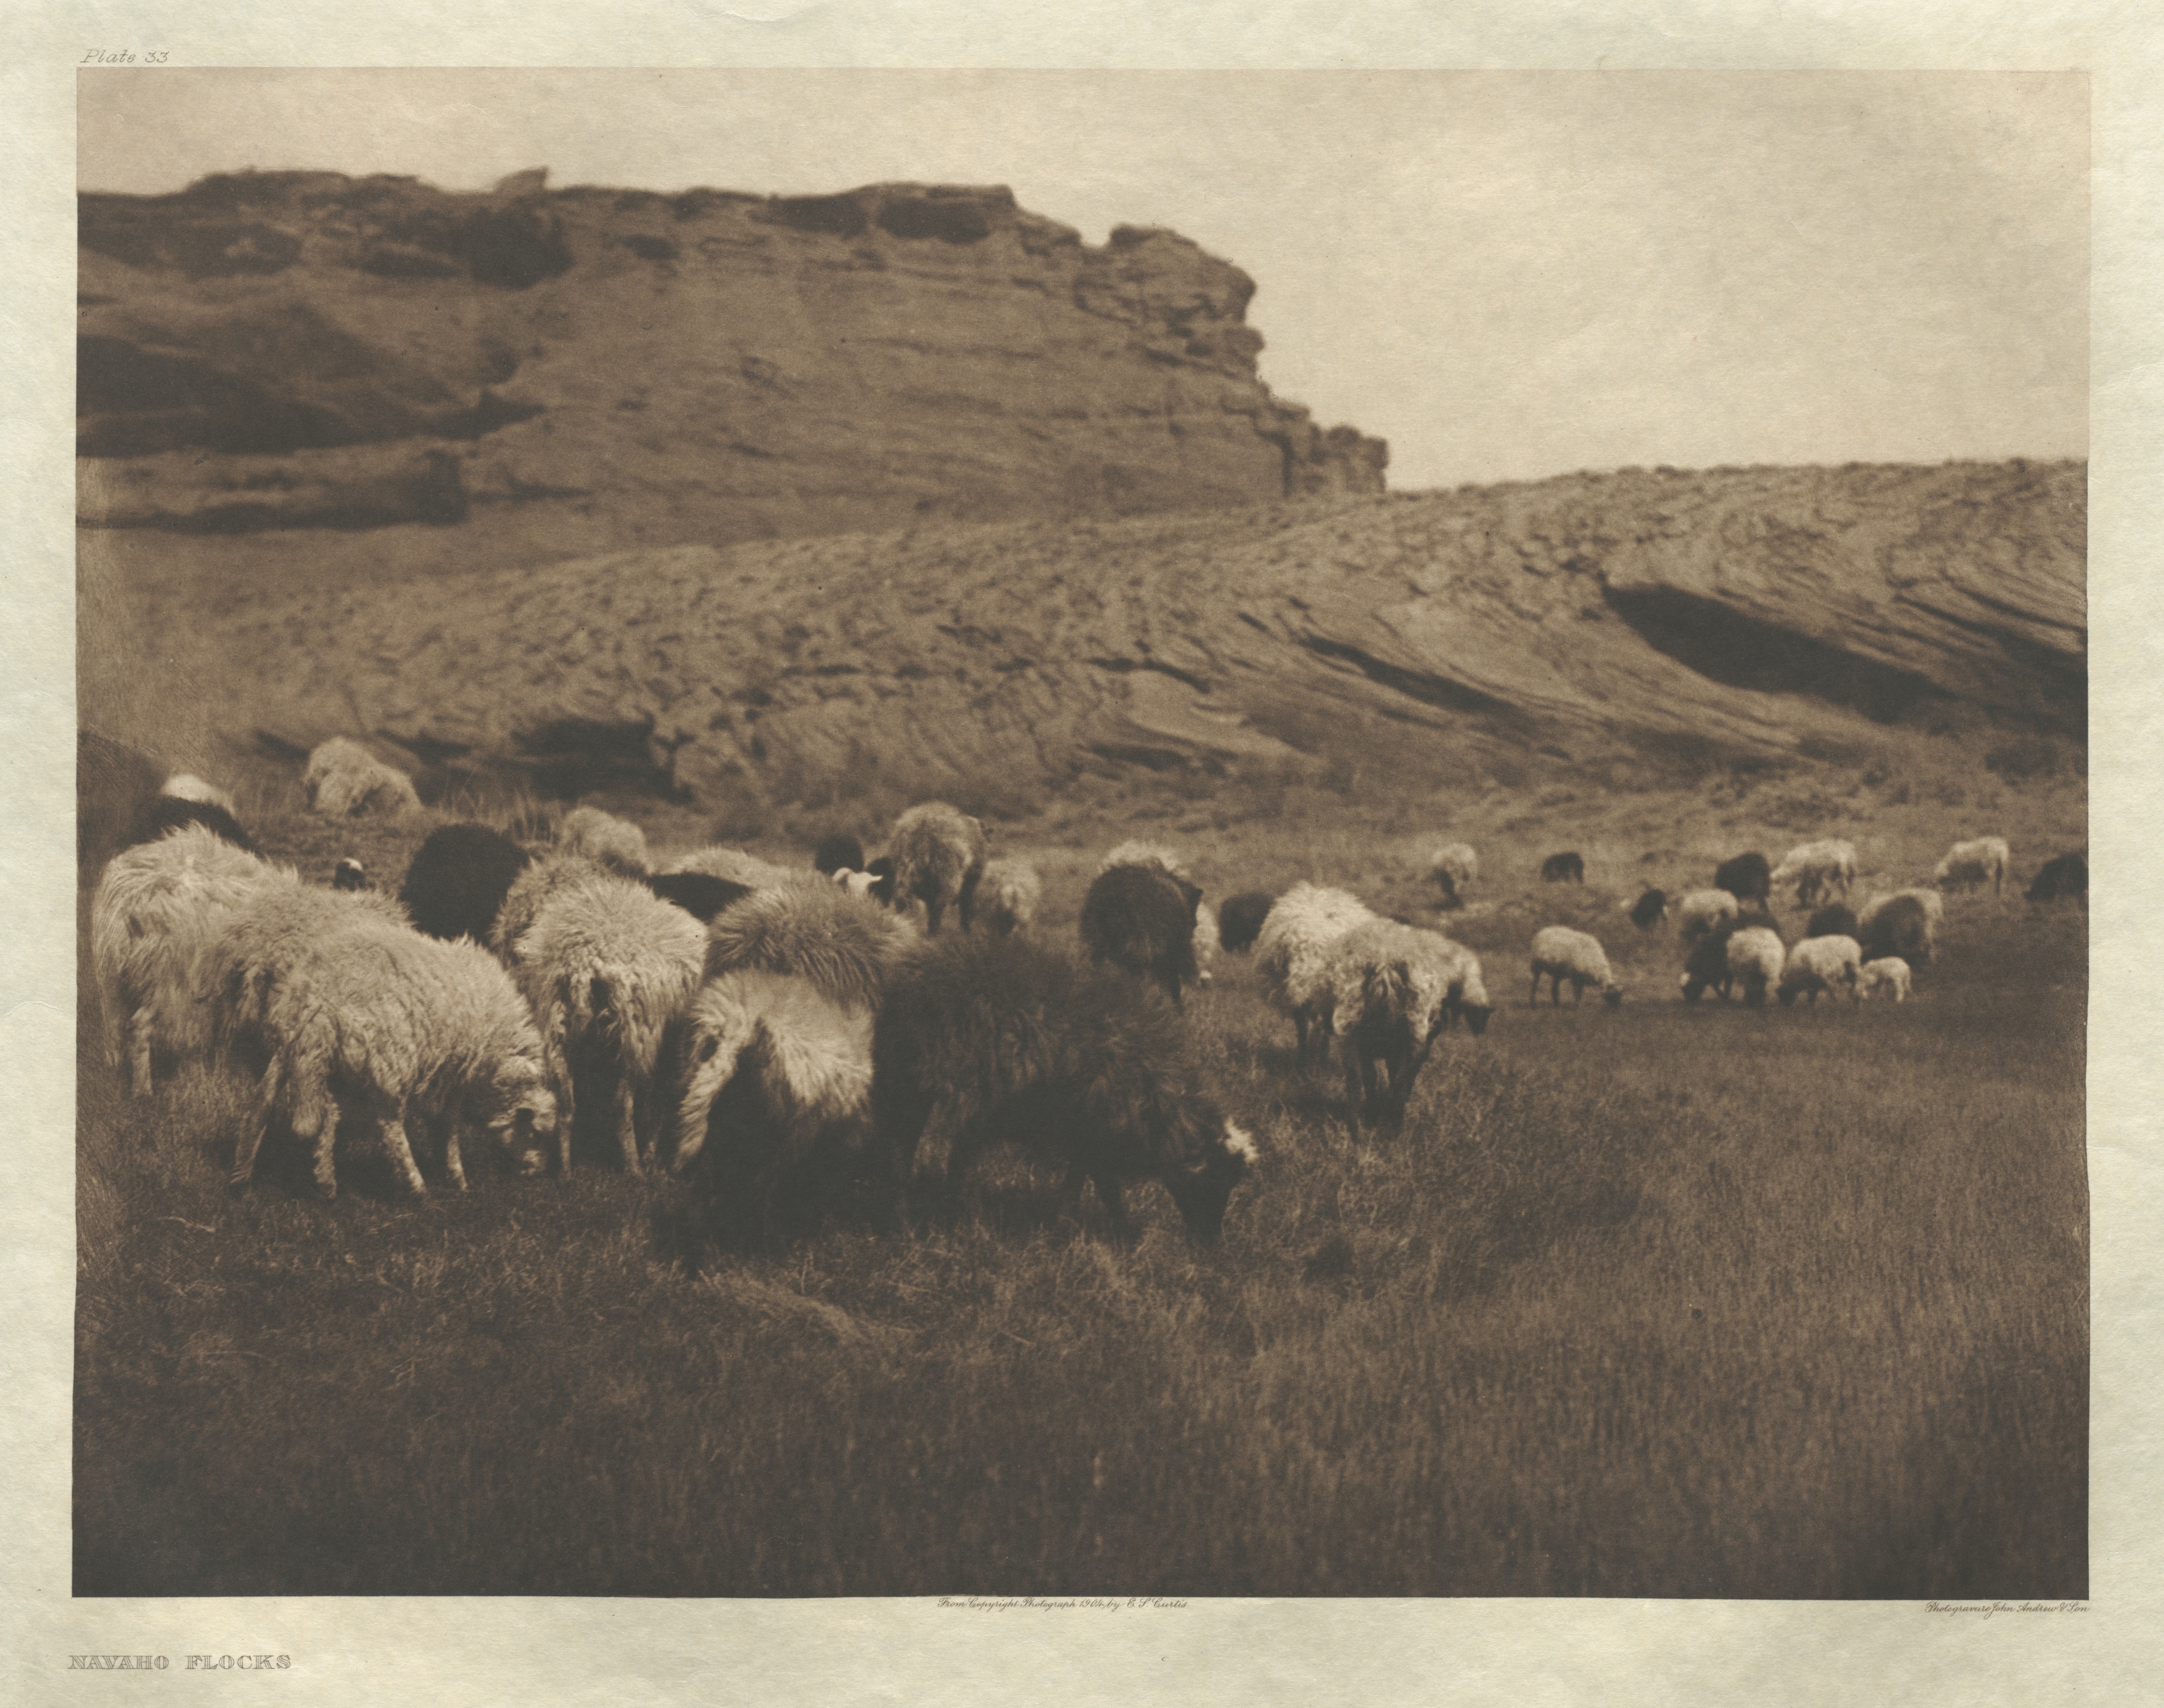 Portfolio I, Plate 33: Navaho Flocks